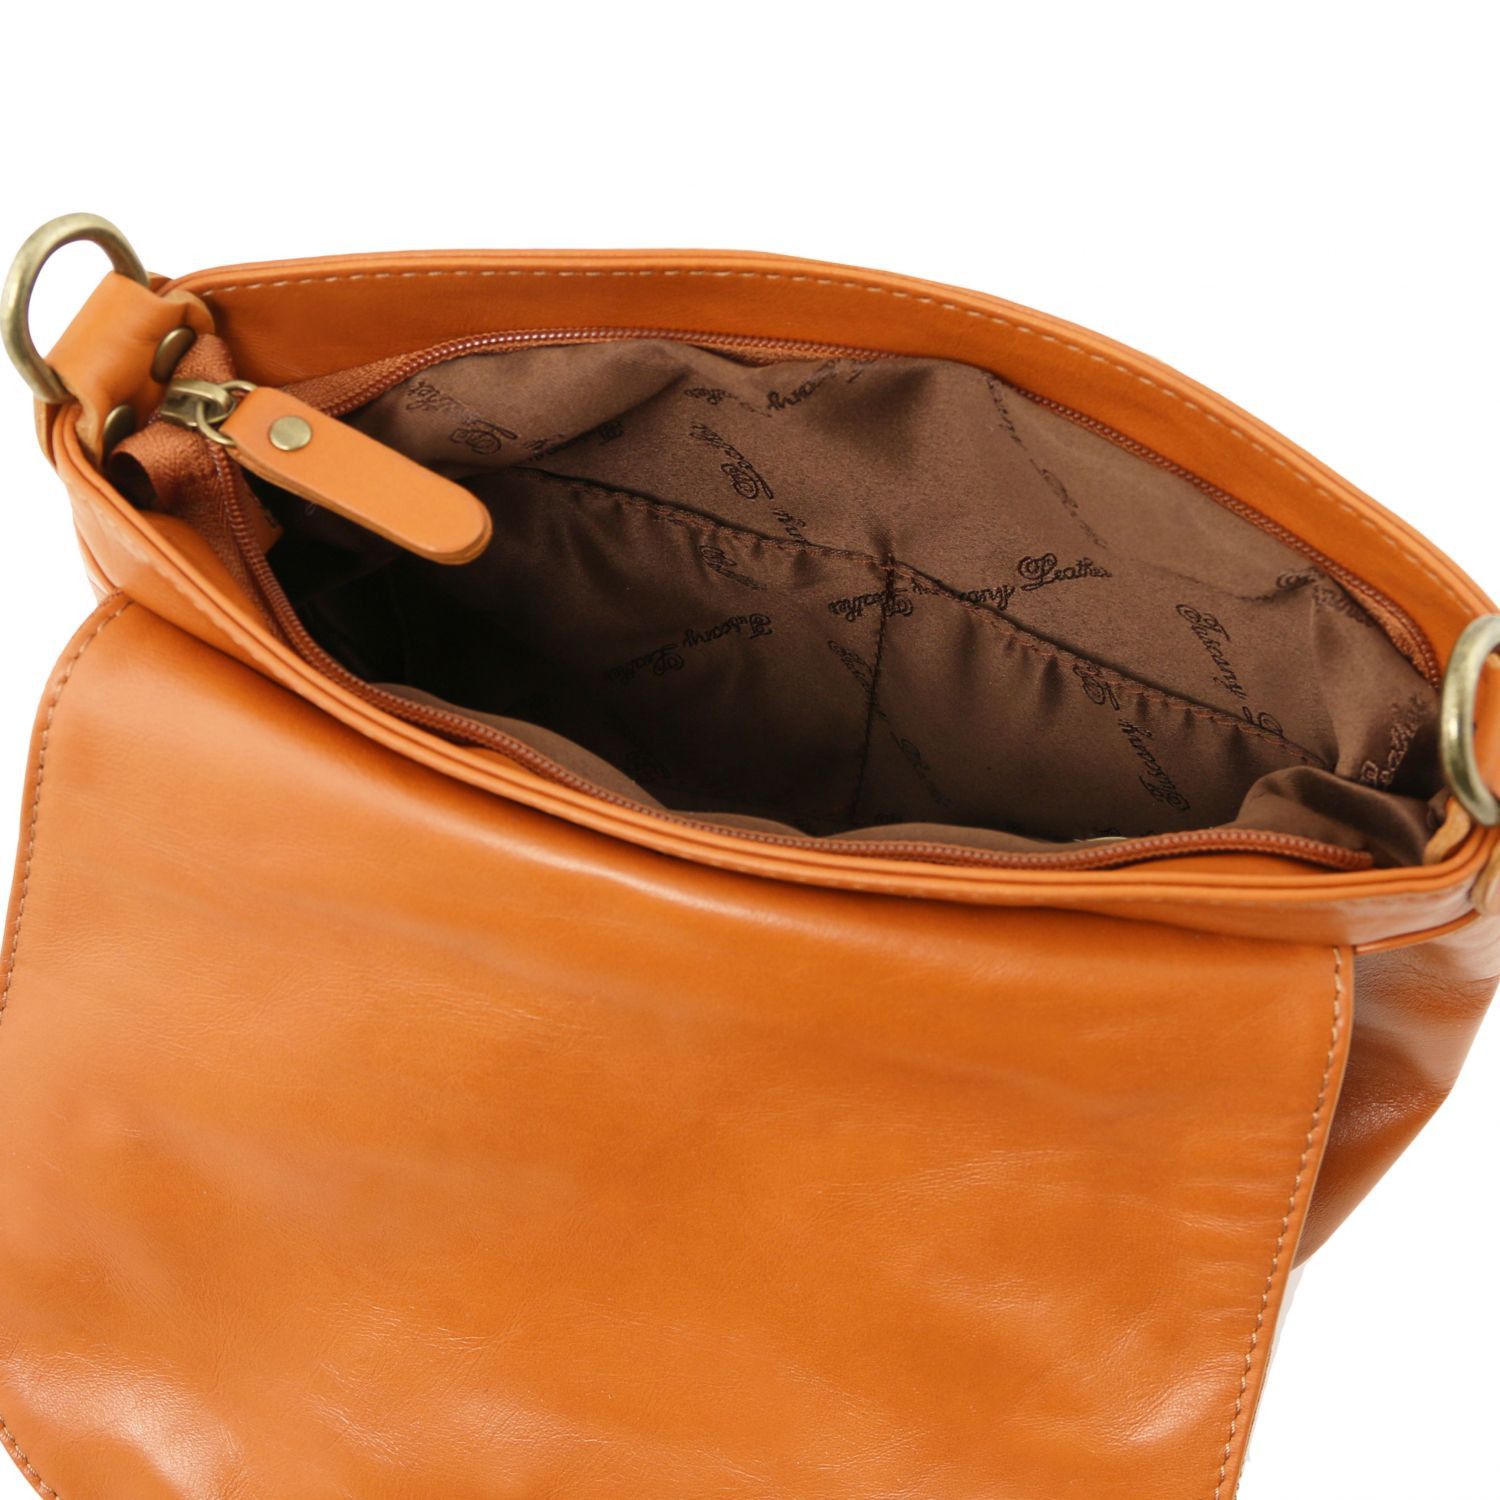 Dama Soft Midi leather bag with shoulder strap